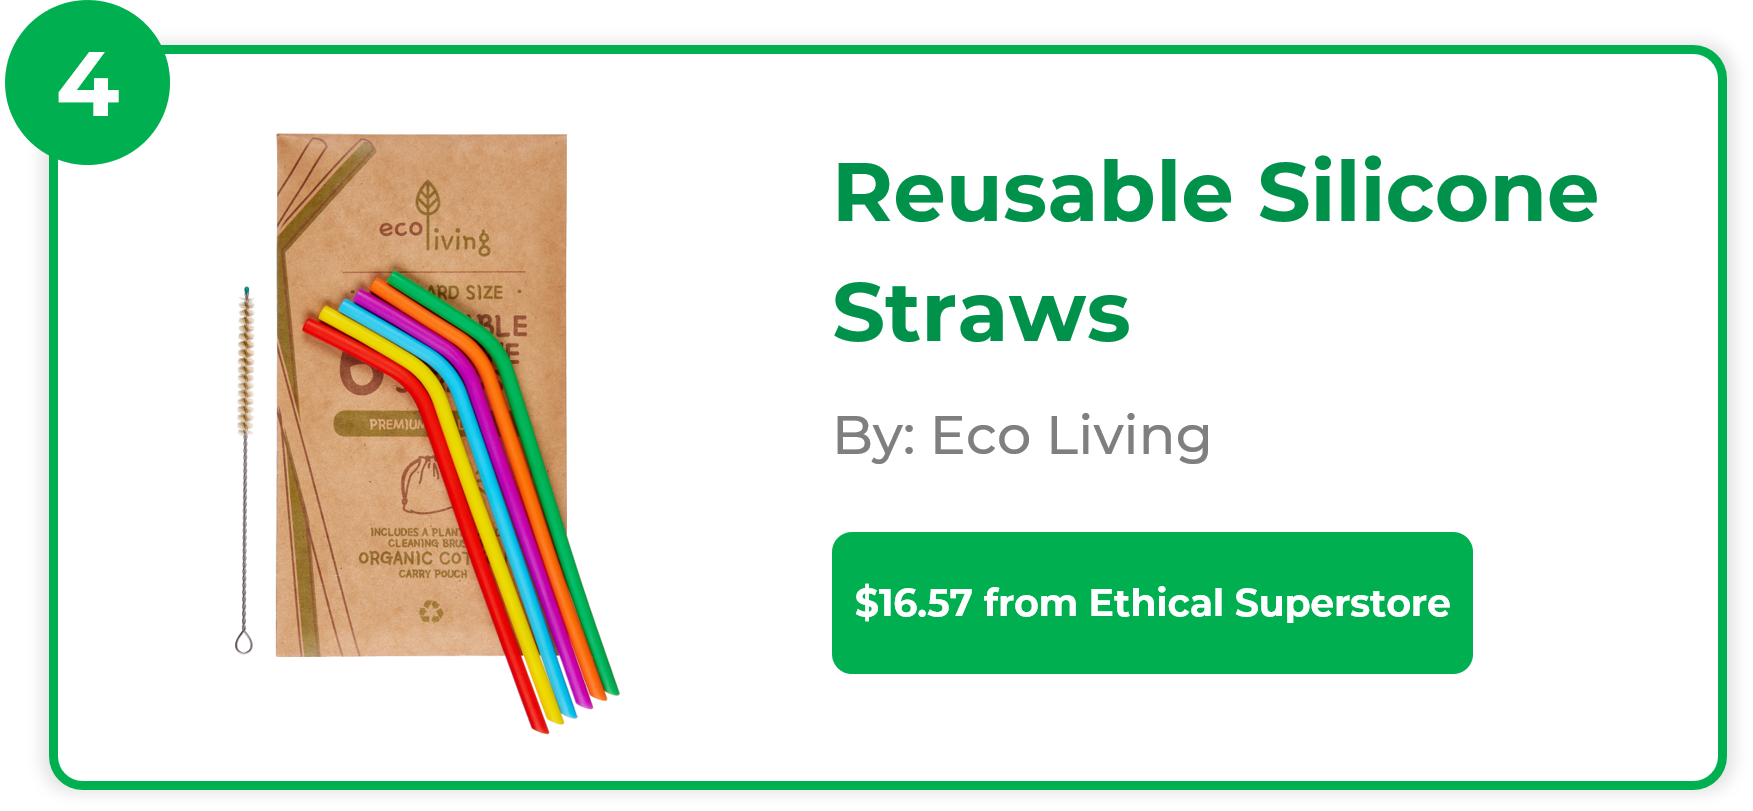 Reusable Silicone Straws - Eco Living